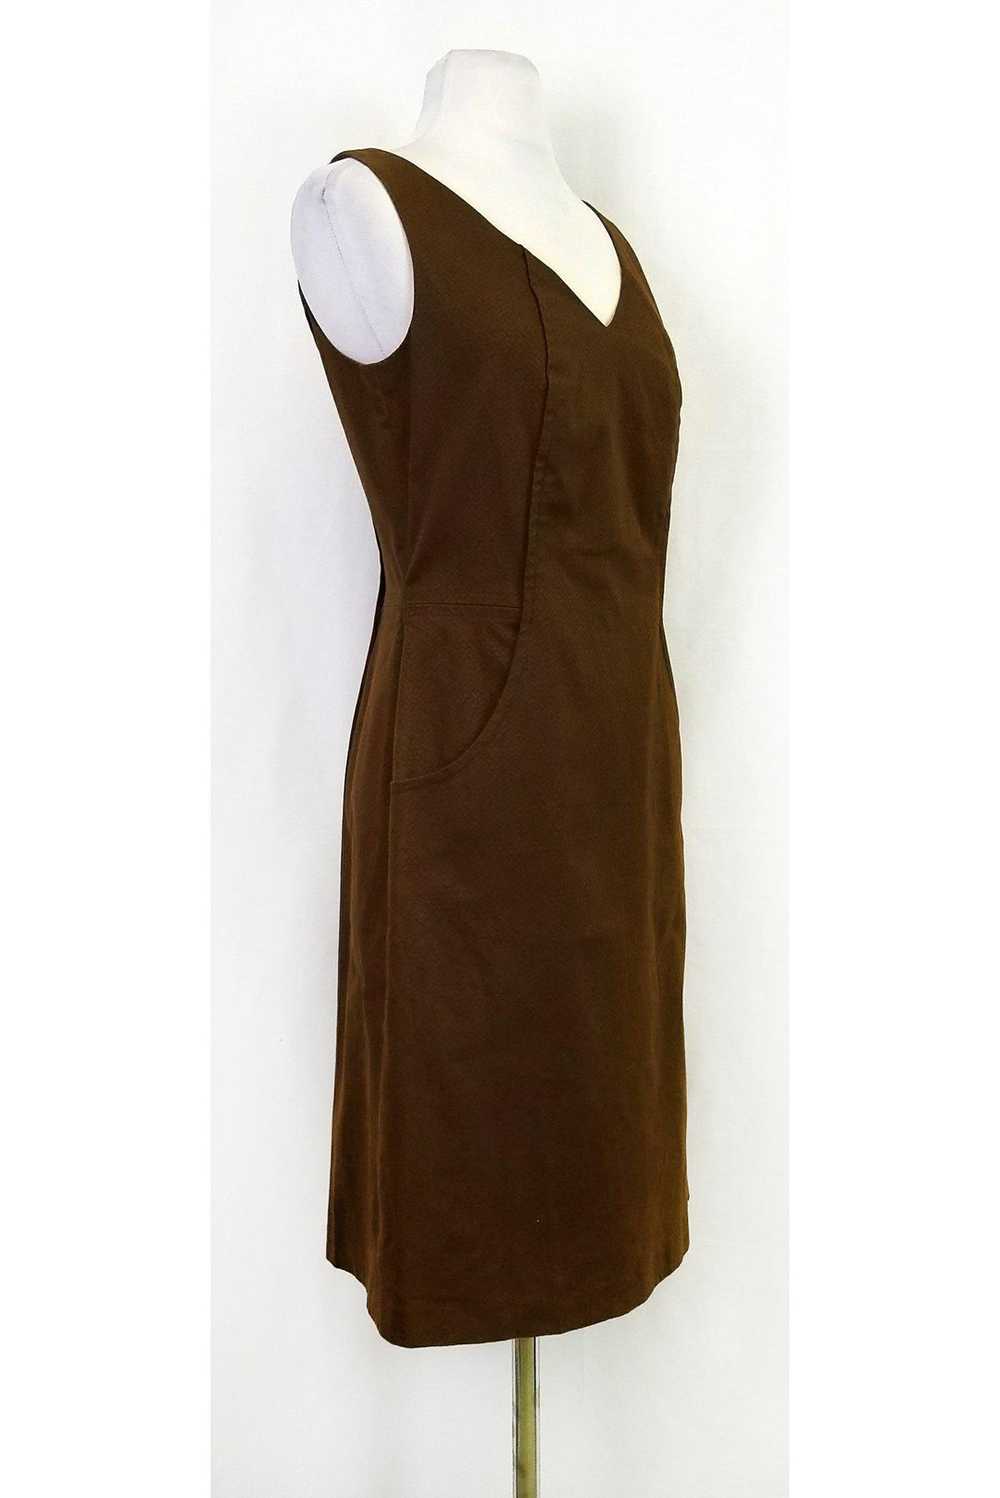 Lafayette 148 - Brown Patterned Dress Sz 2 - image 2